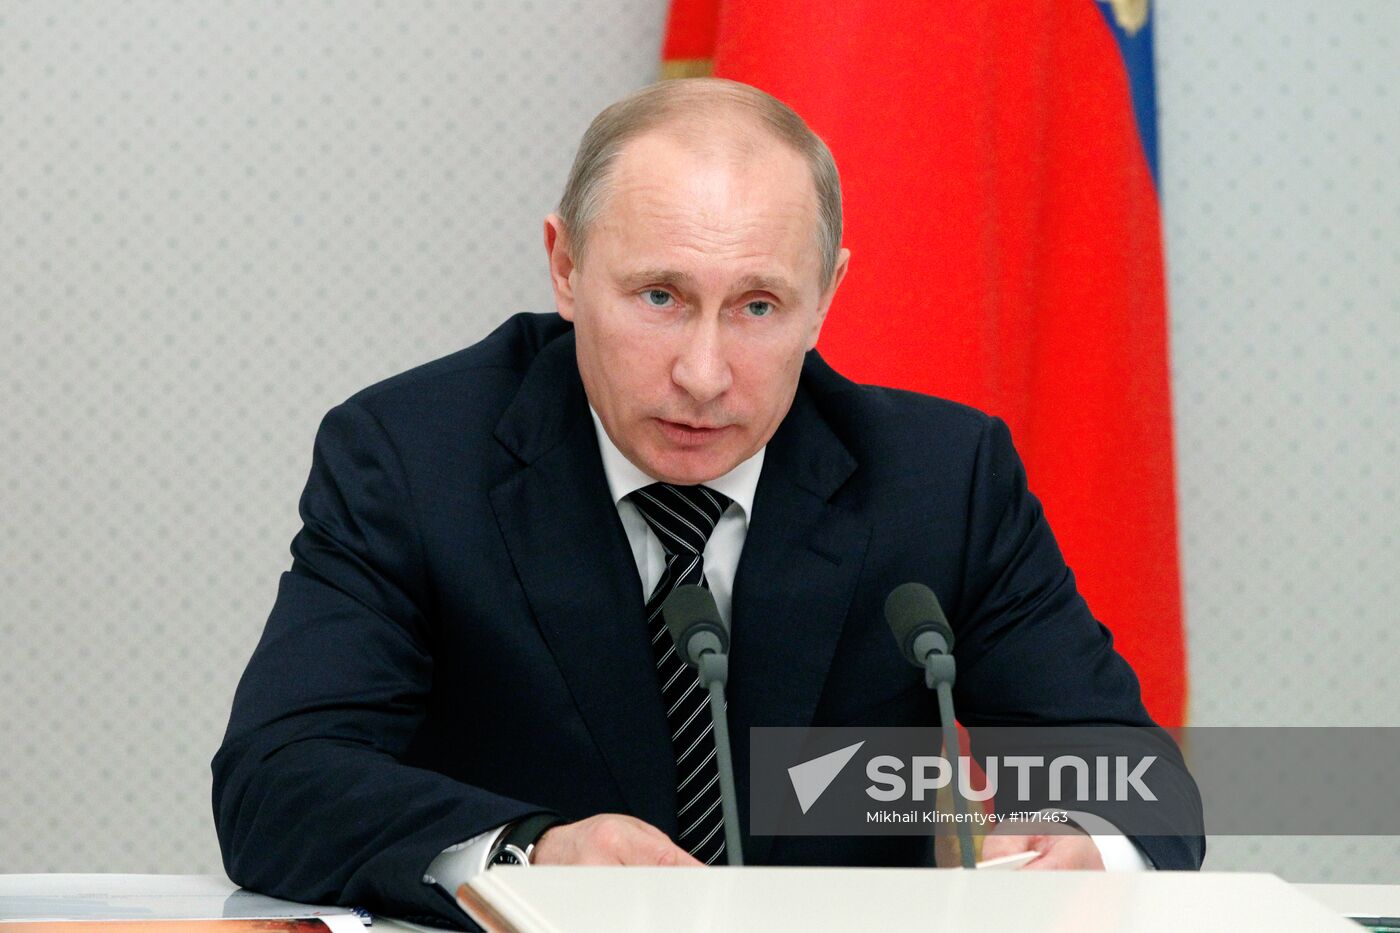 Russian President Vladimir Putin chairs meeting in Sochi